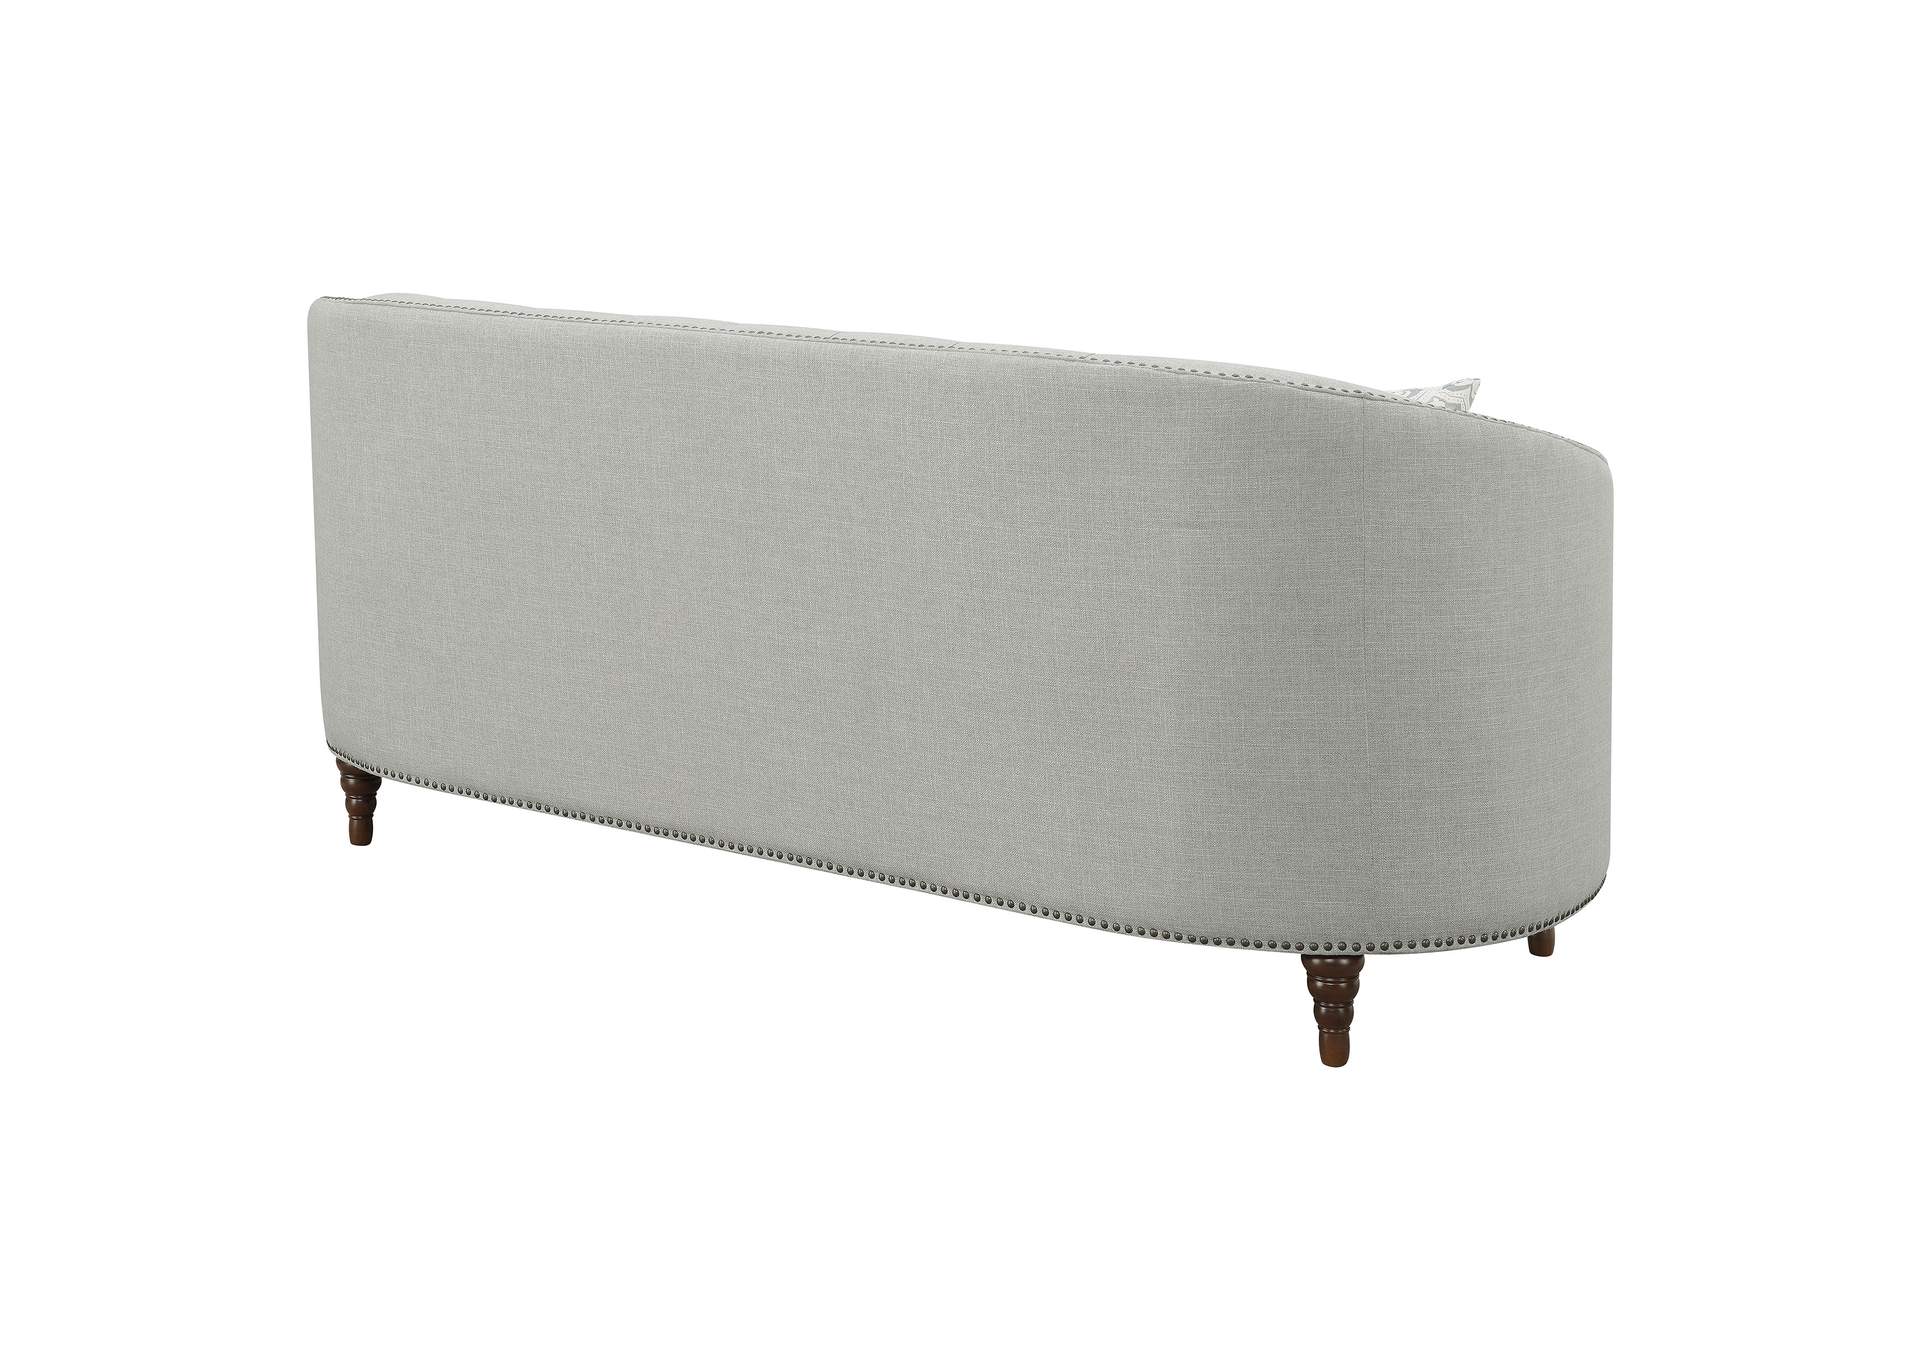 Avonlea Sloped Arm Upholstered Sofa Trim Grey,Coaster Furniture